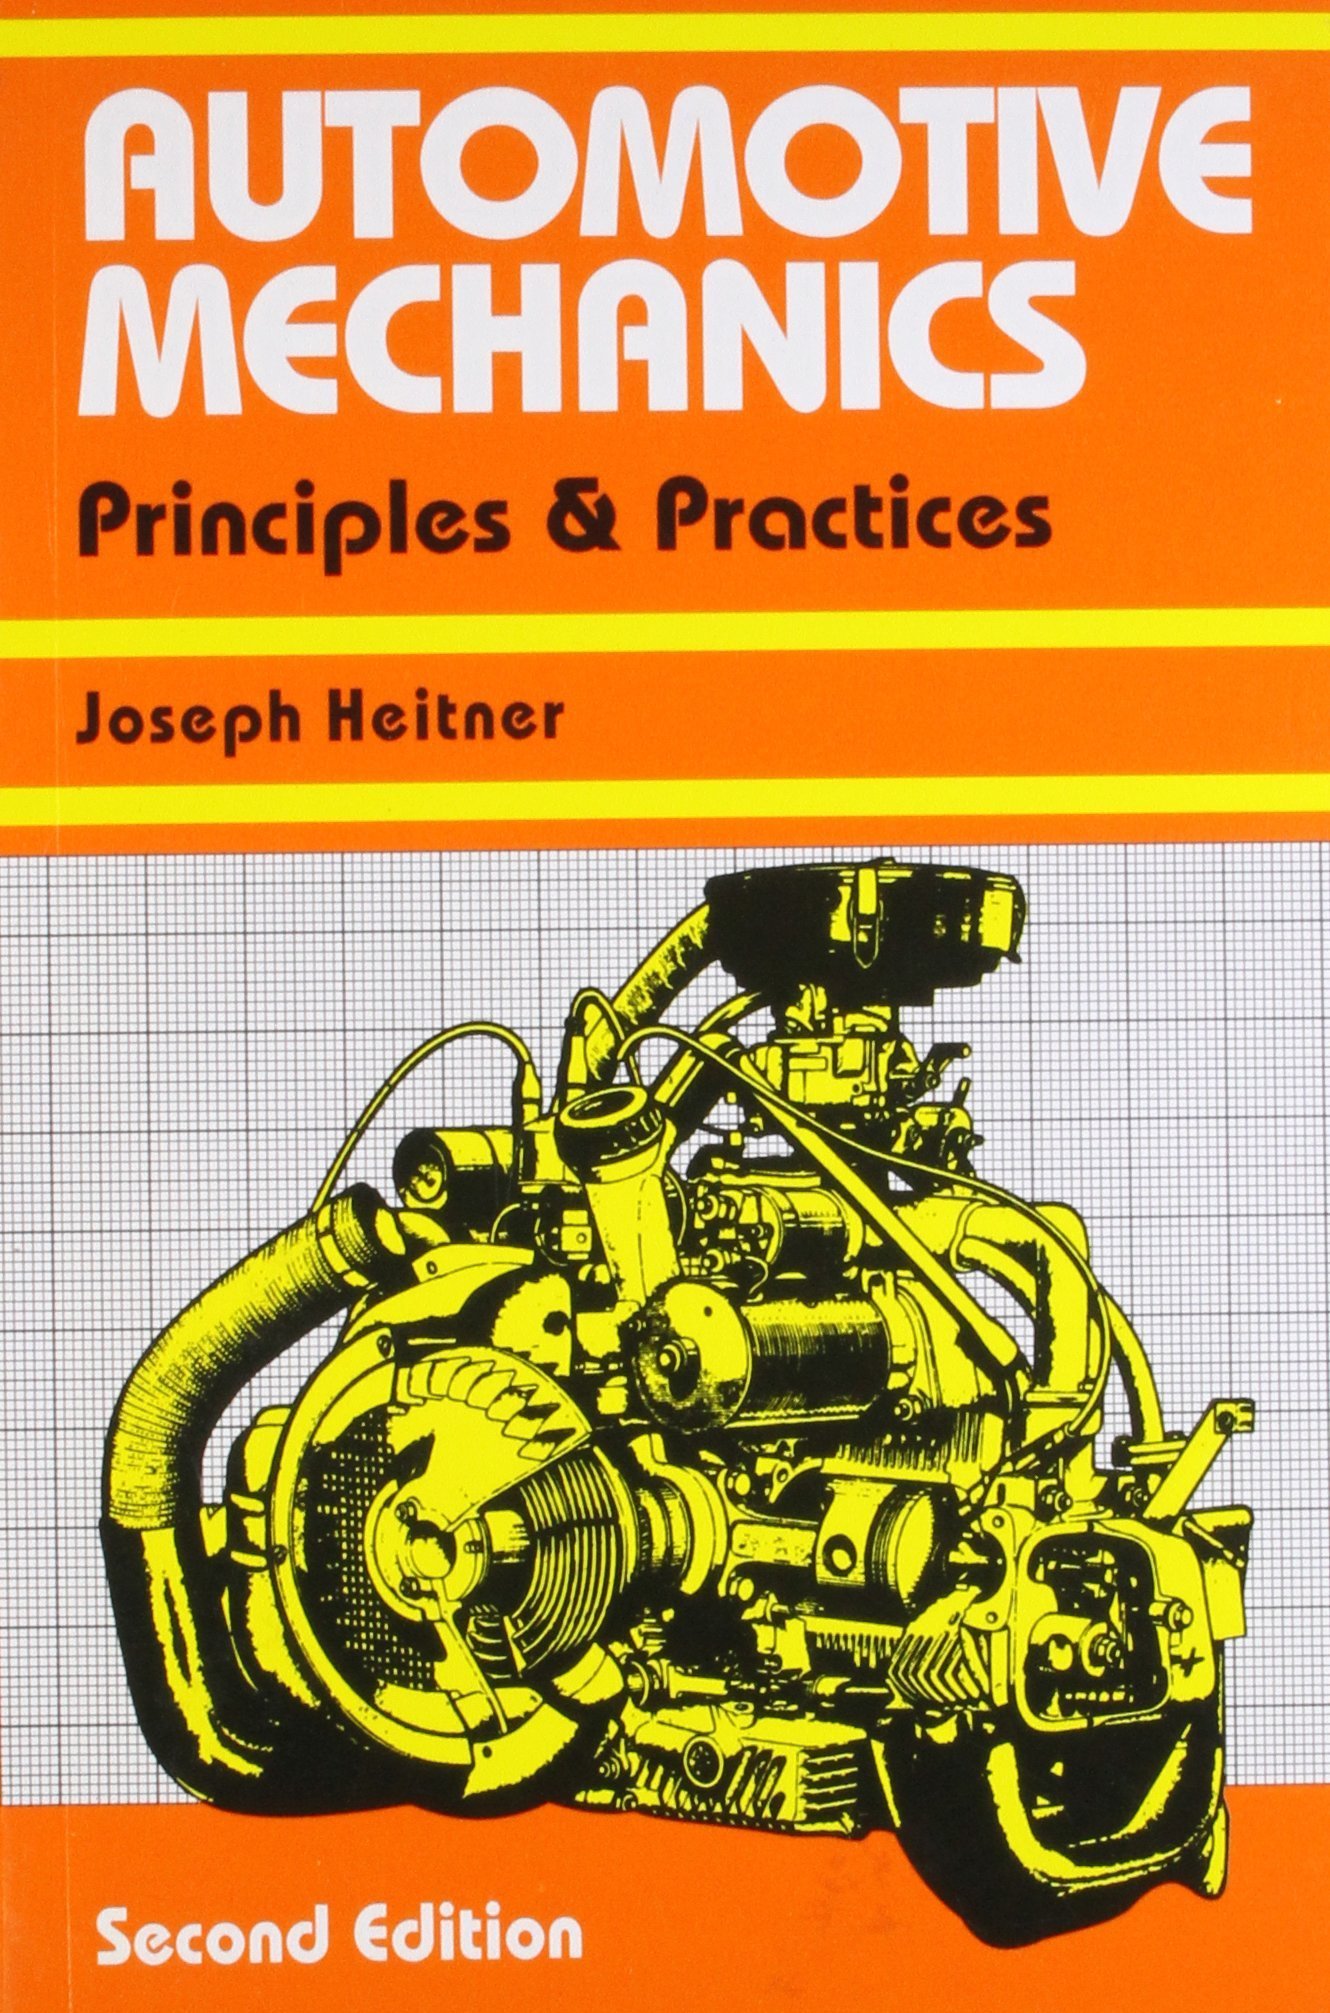 Automotive Technology Books Free Download